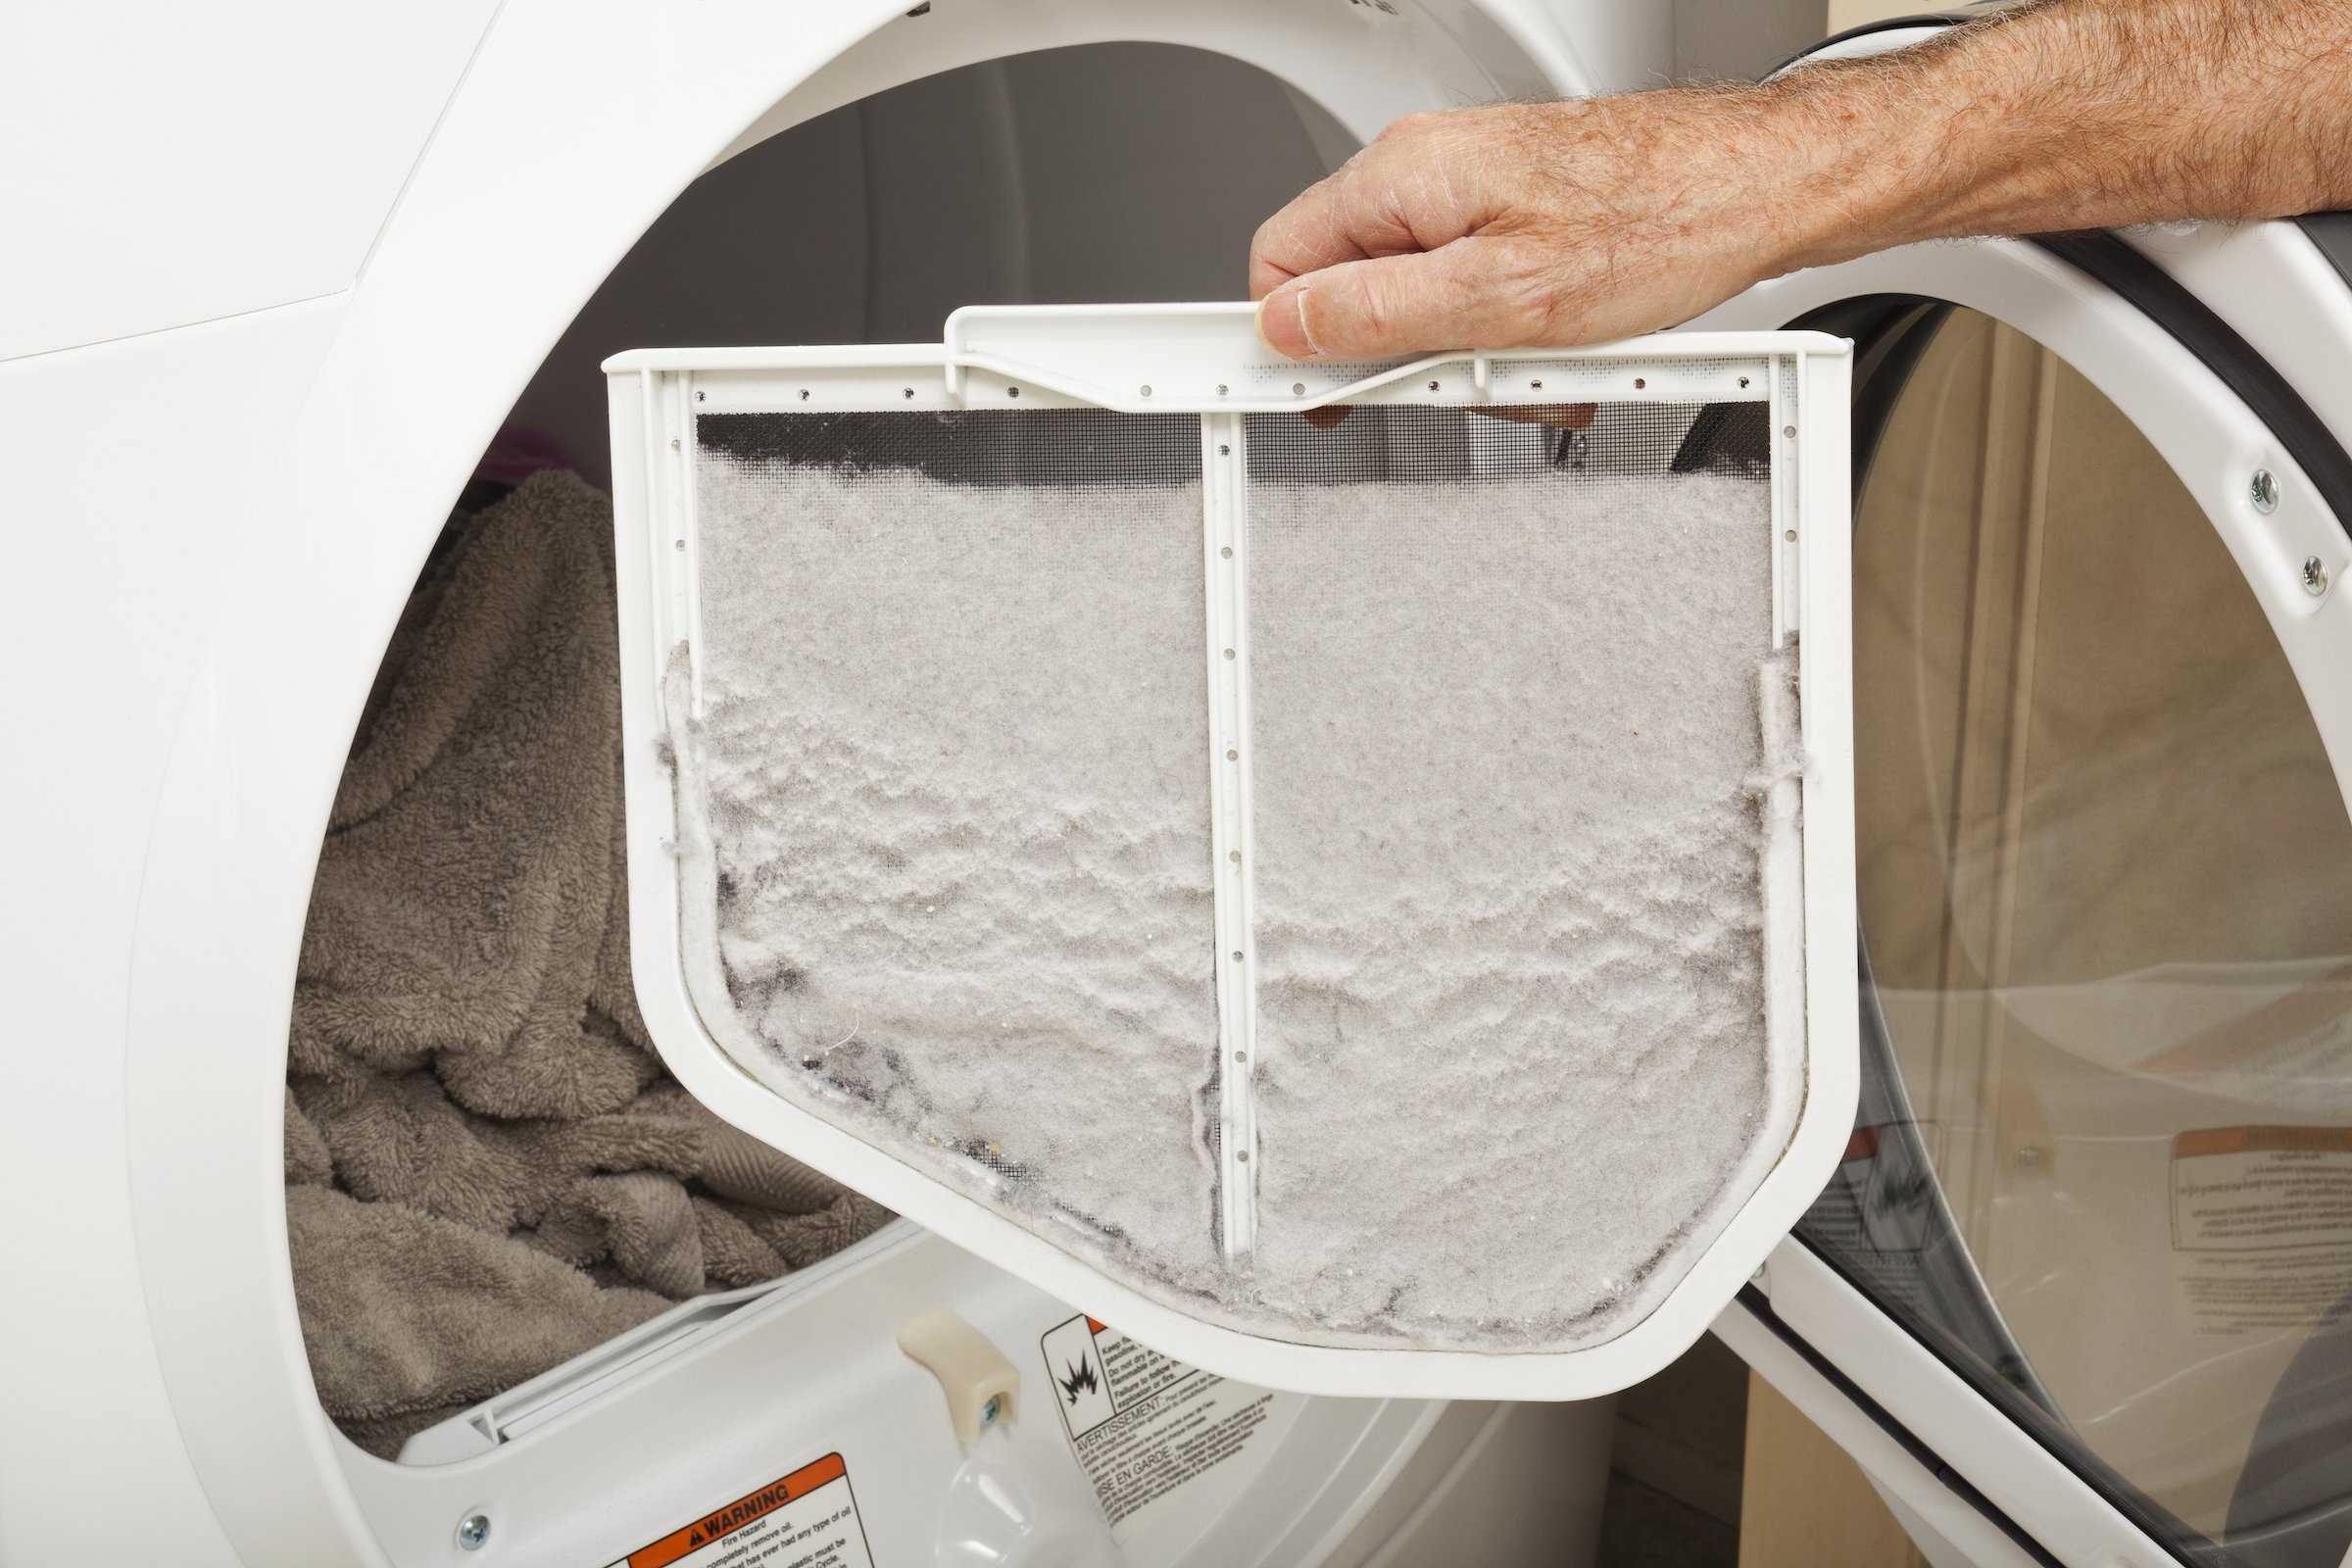 https://blog.puls.com/hs-fs/hubfs/home-appliance-maintenance-tips-dryer.jpg?width=2400&name=home-appliance-maintenance-tips-dryer.jpg